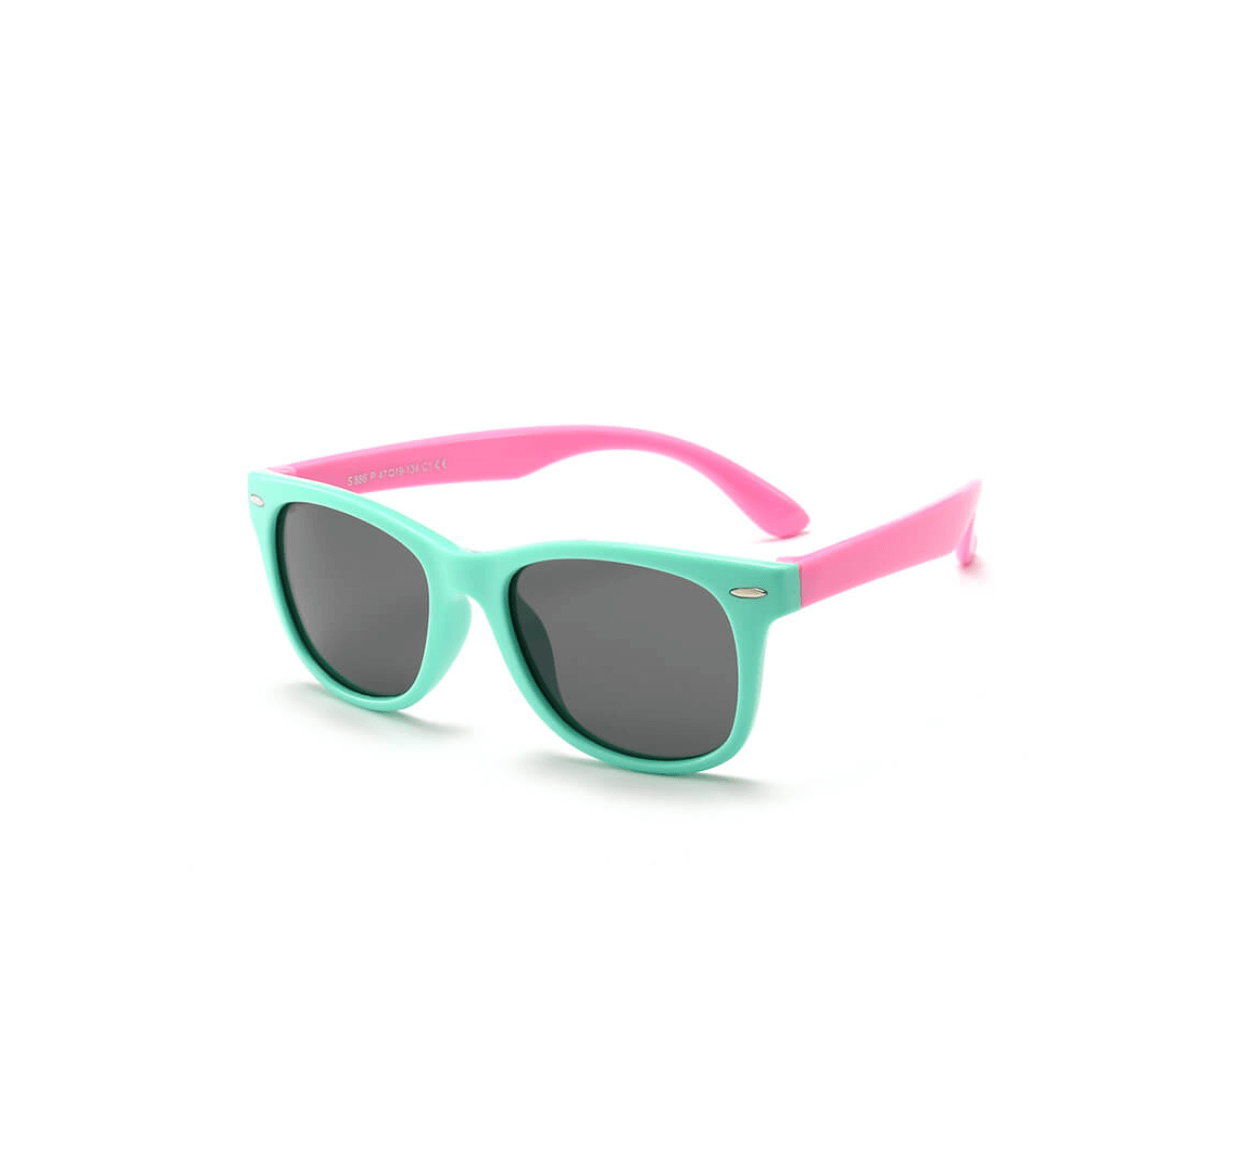 Custom Polarized Sunglasses, green kids sunglasses, custom logo polarized sunglasses, polarized sunglasses manufacturers, factory eyewear